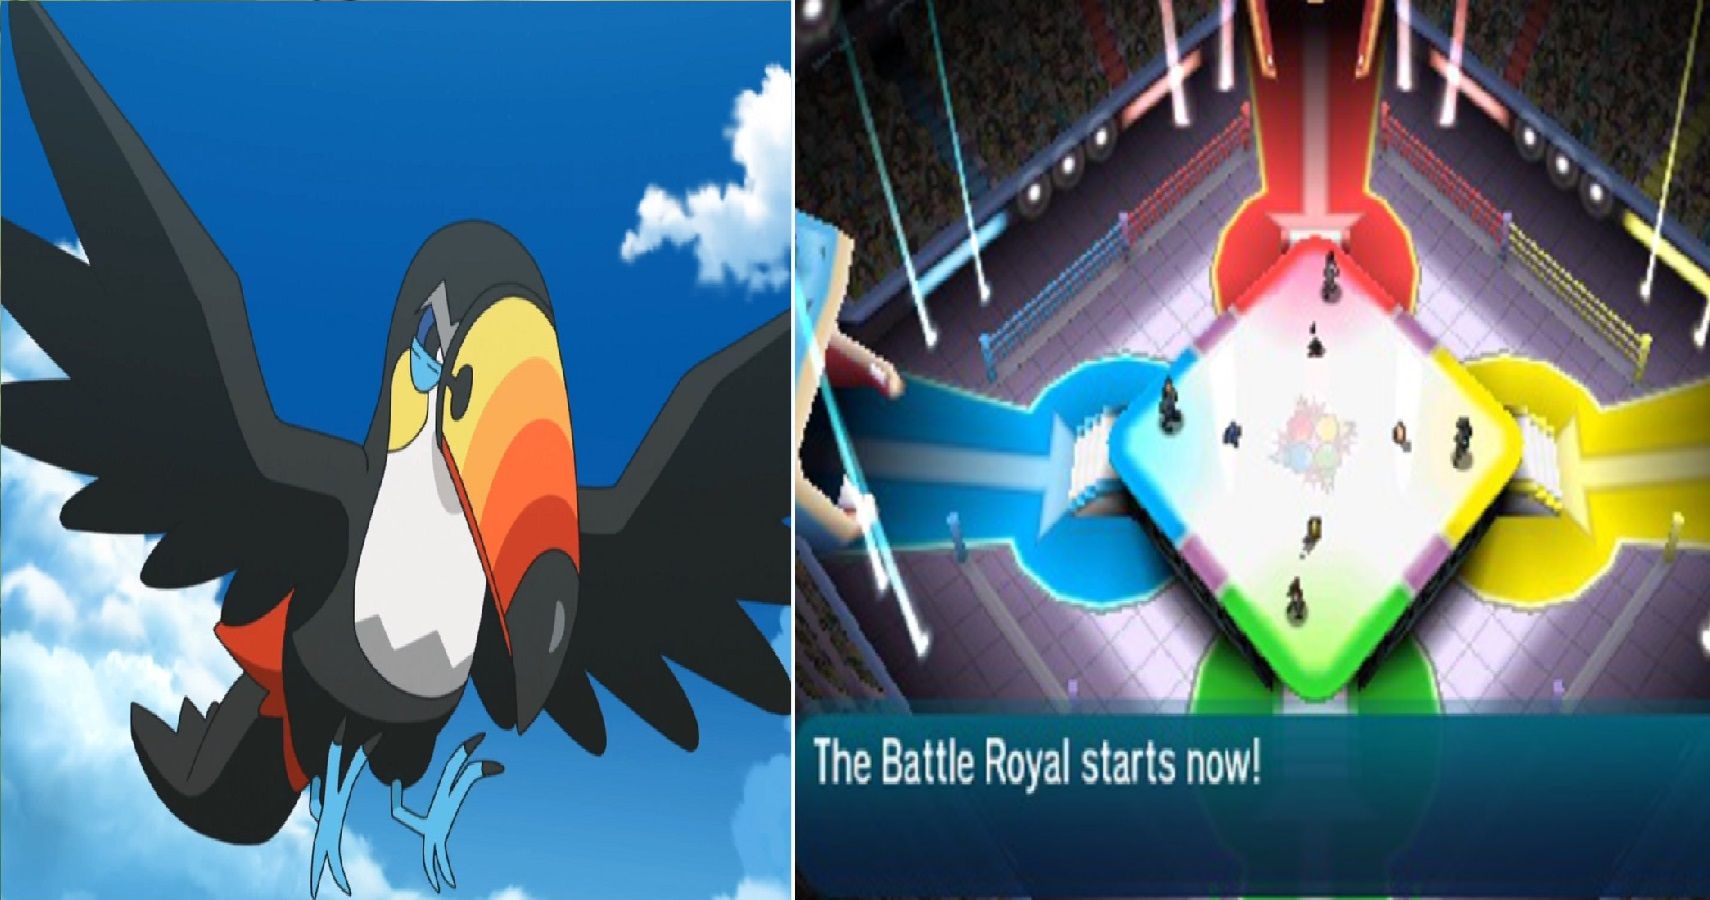 The Pokémon Toucannon and one of Pokémon Sun & Moon's Battle Royals